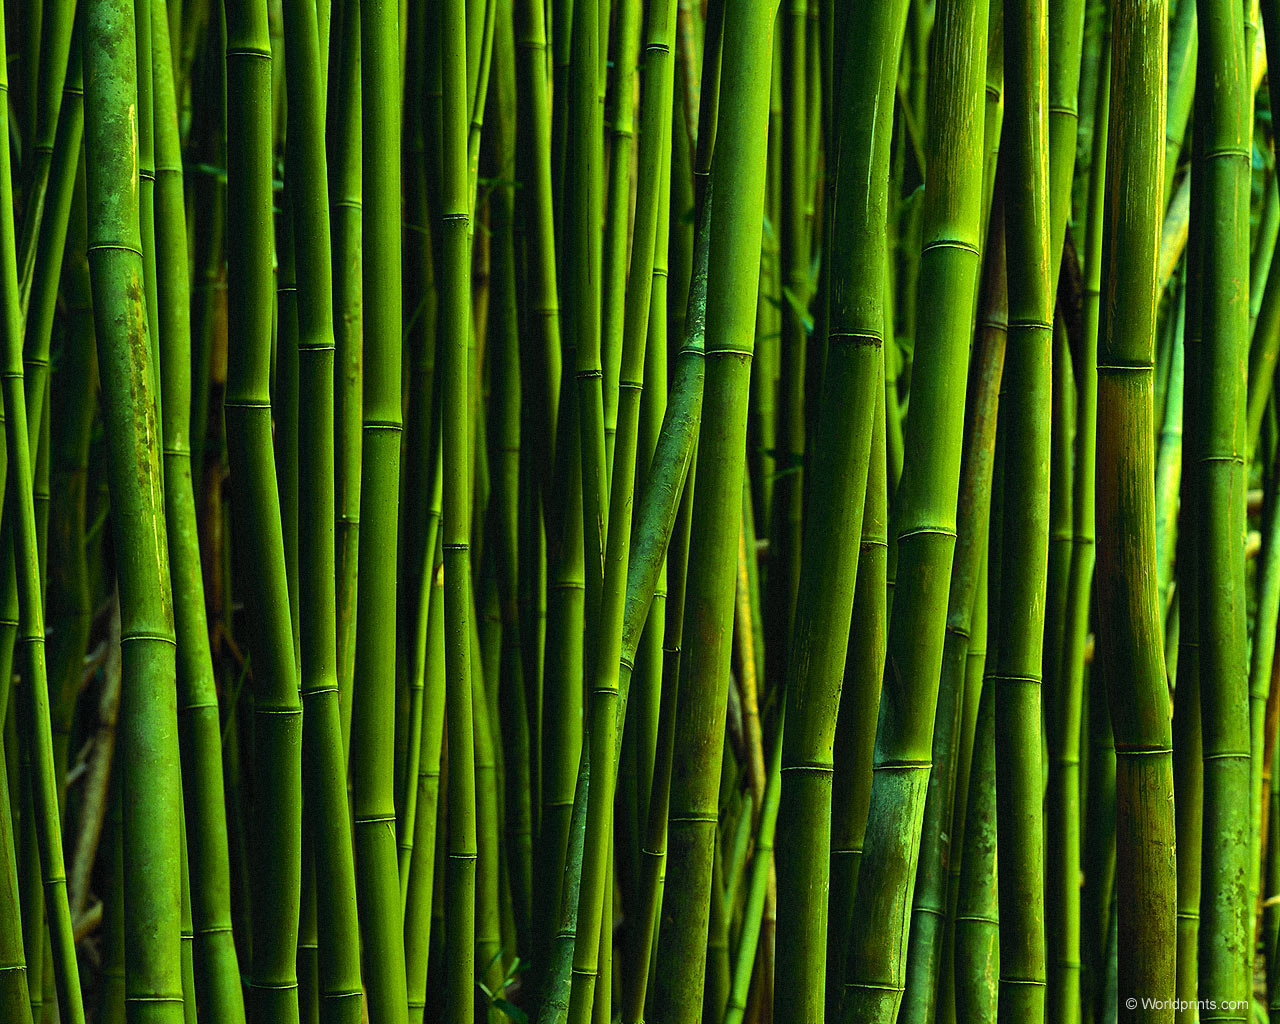 papier peint en bambou,vert,plante,herbe,famille d'herbe,légume